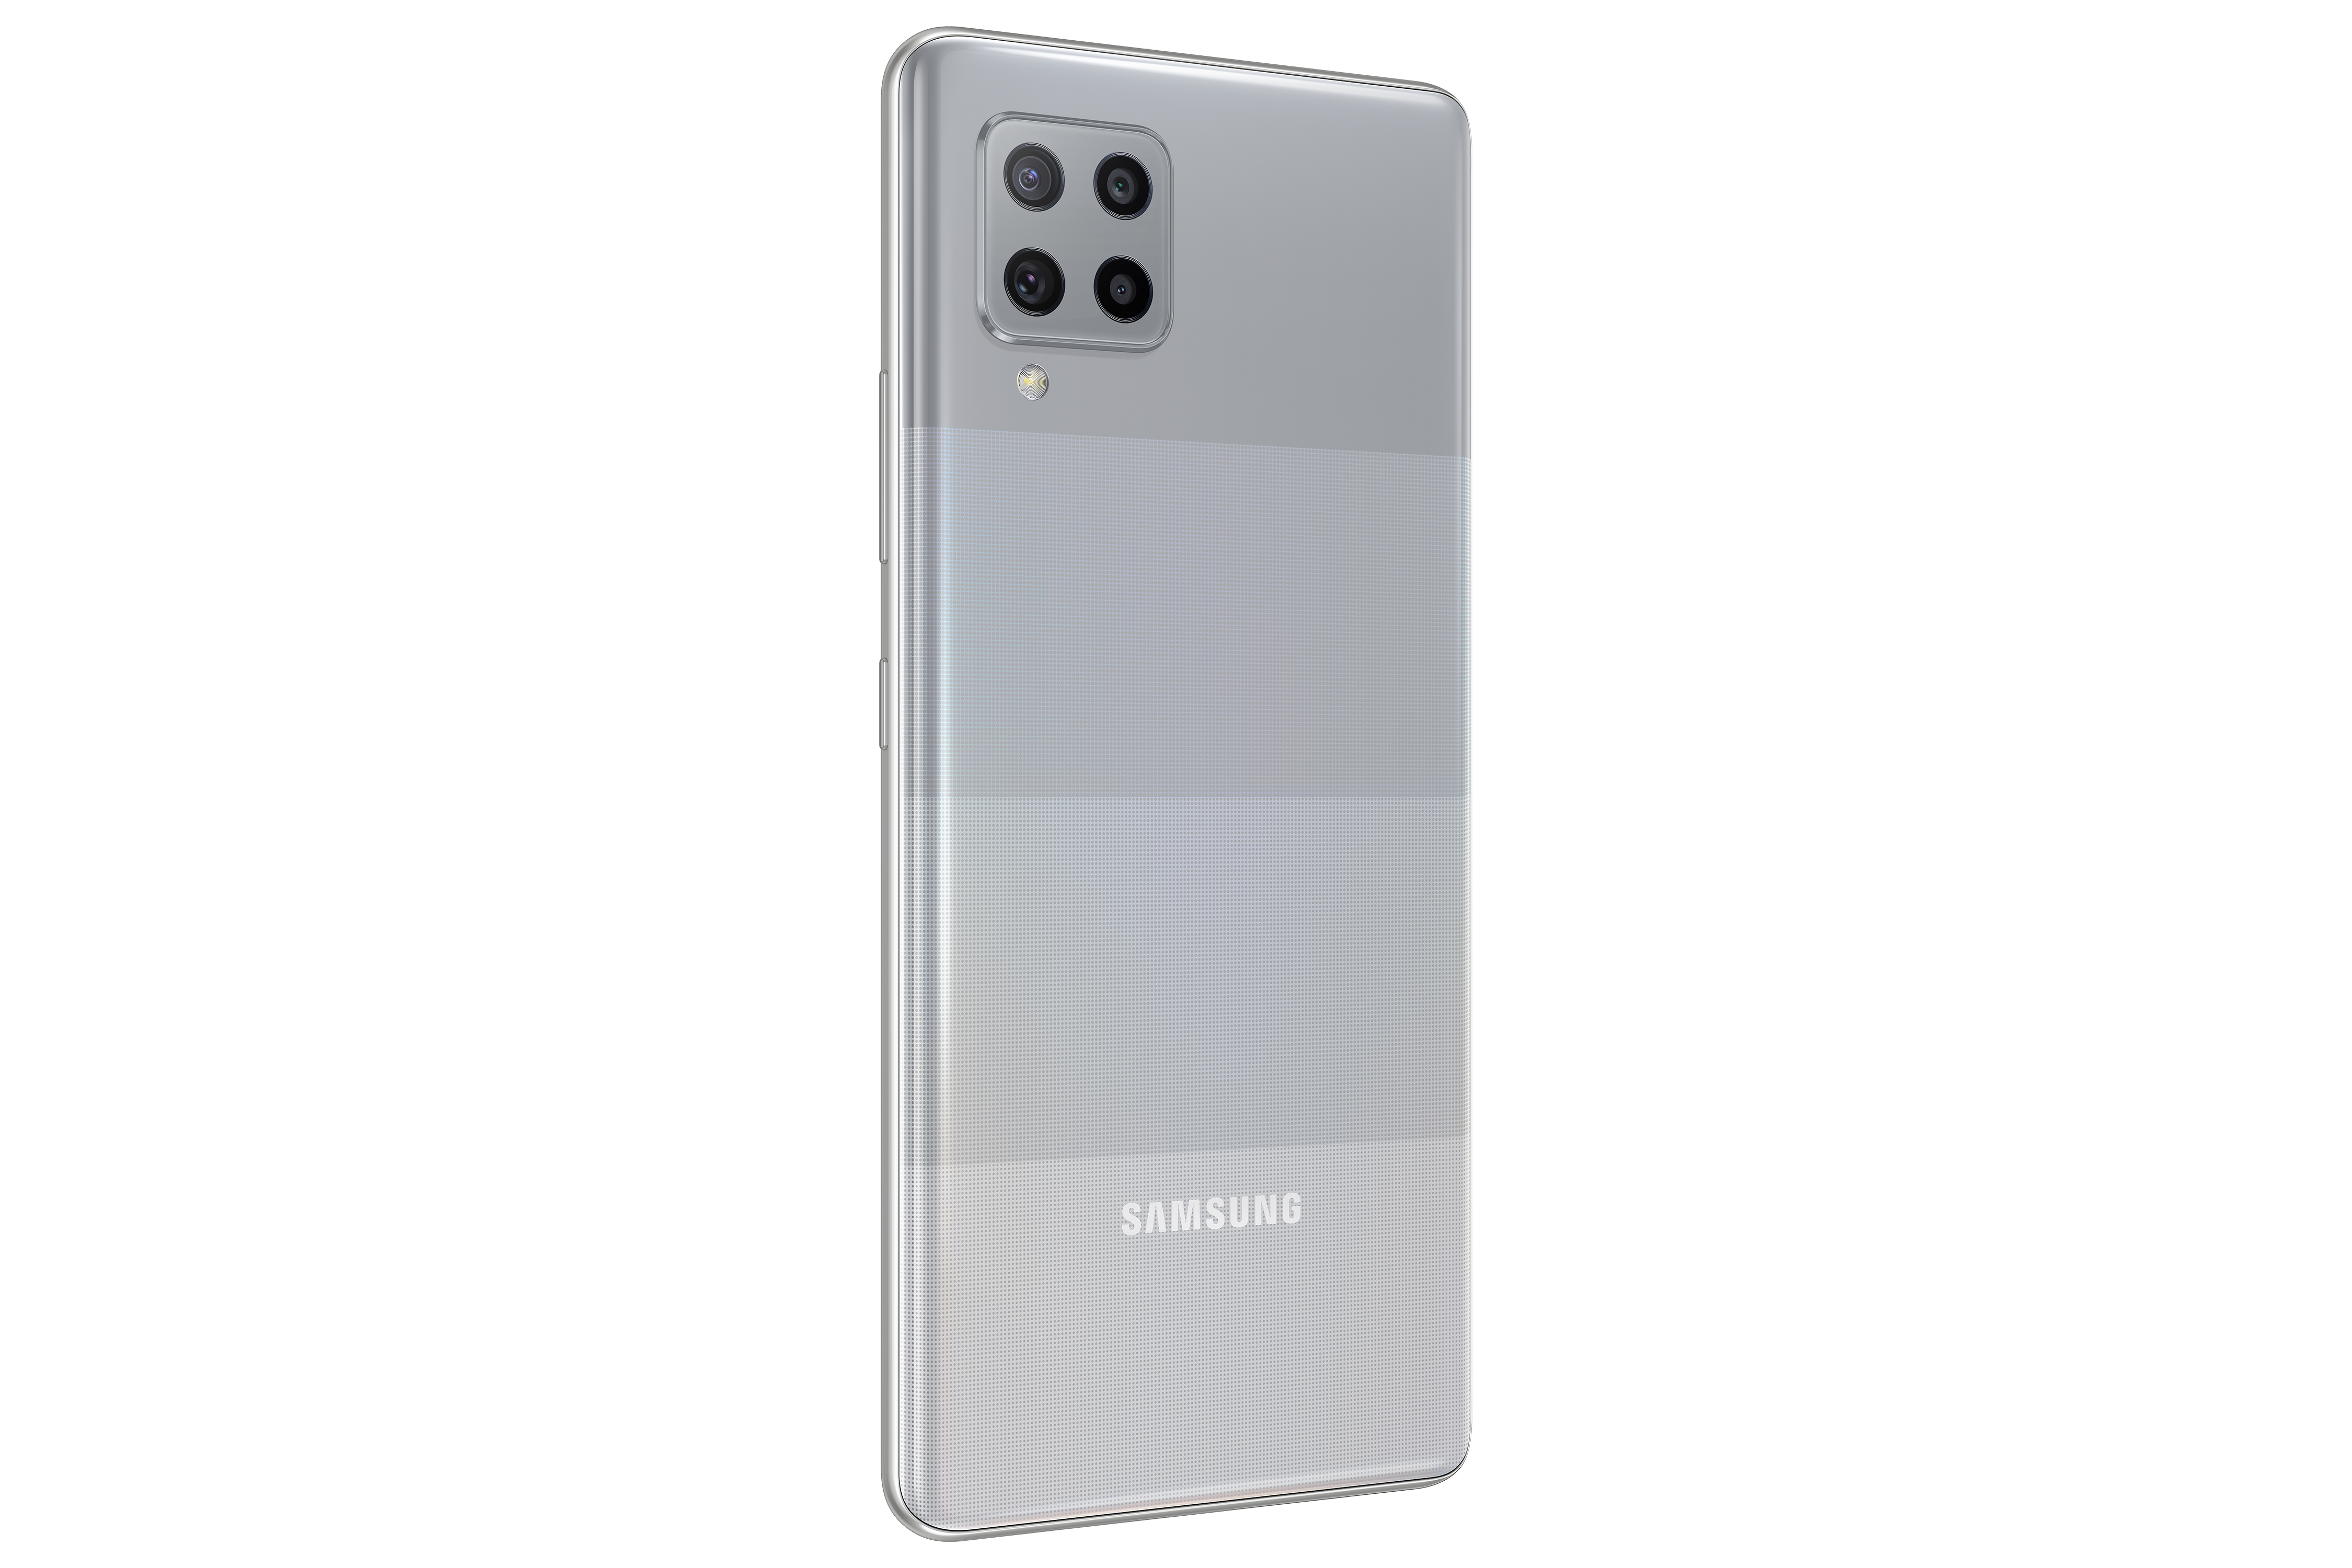 Samsung Galaxy A42 5G: The mid-range phone has a problem ...